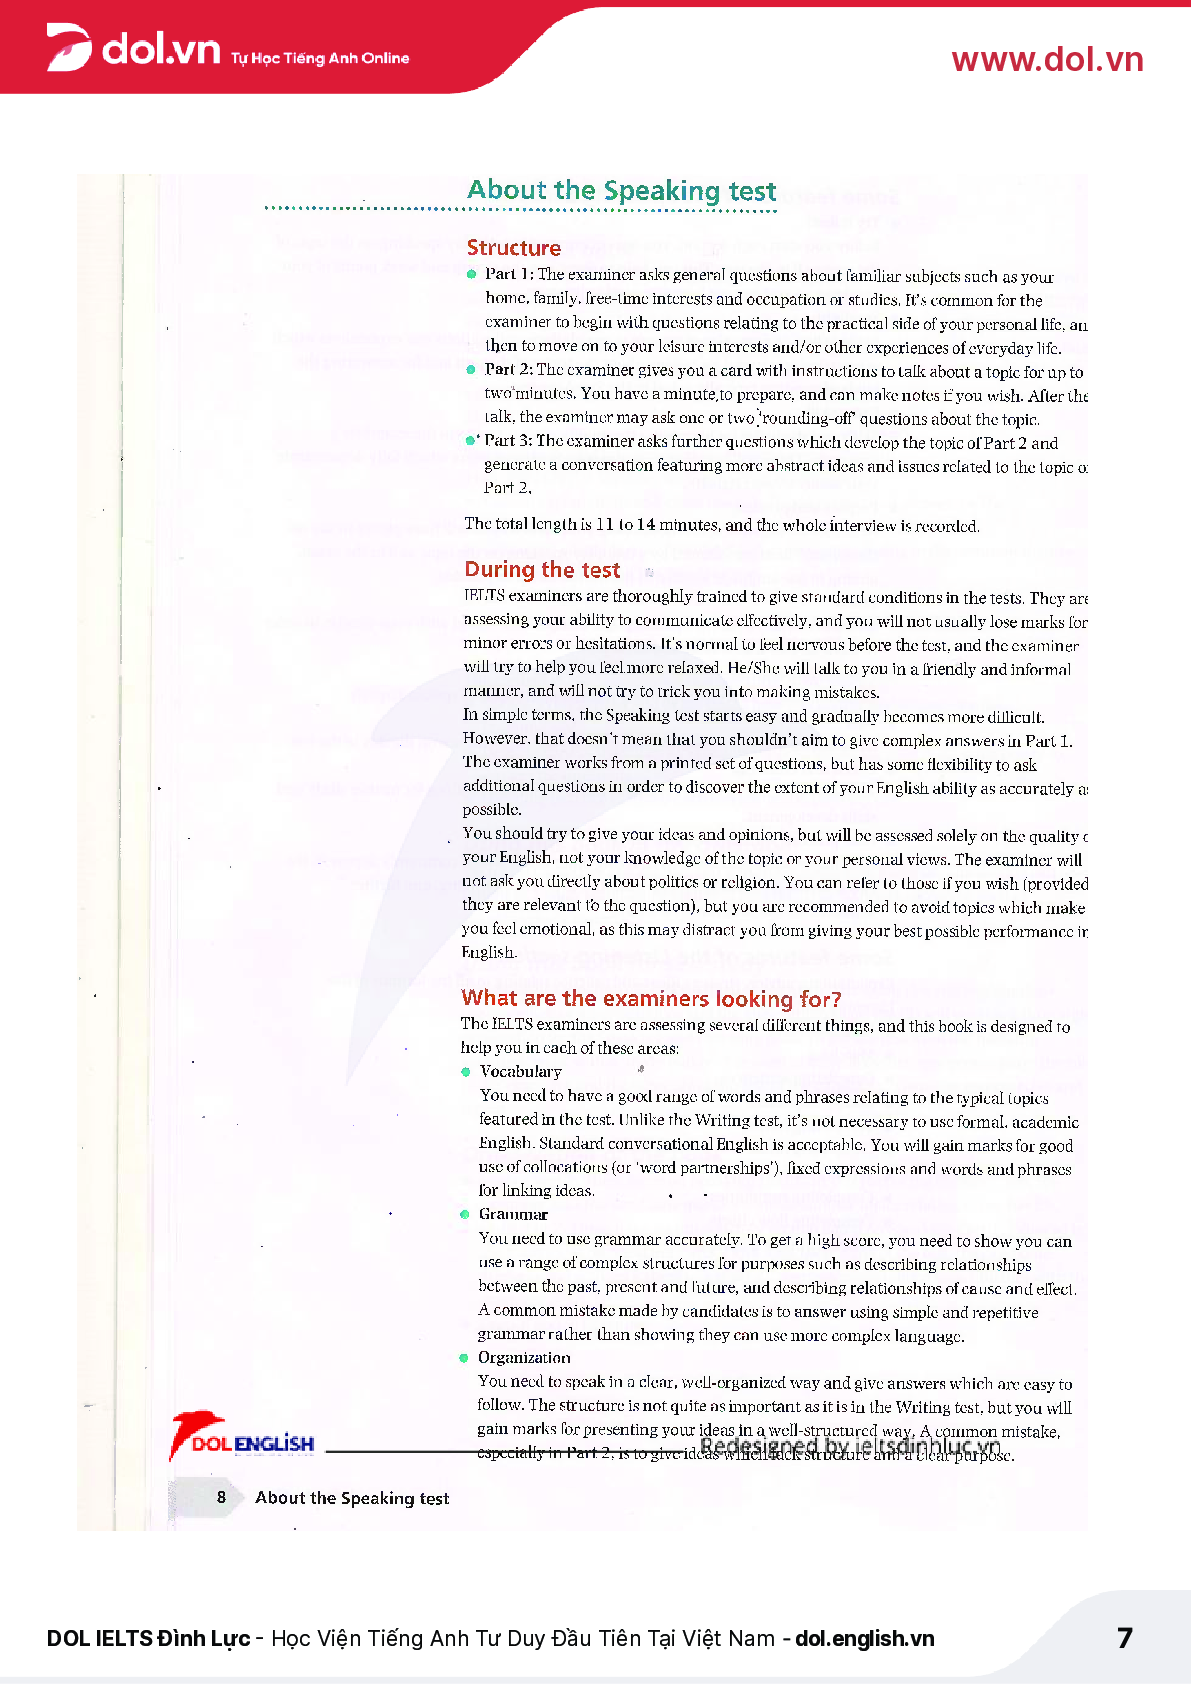 Sách IELTS Advantage Speaking & Listening Skills pdf | Xem online, tải PDF miễn phí (trang 7)